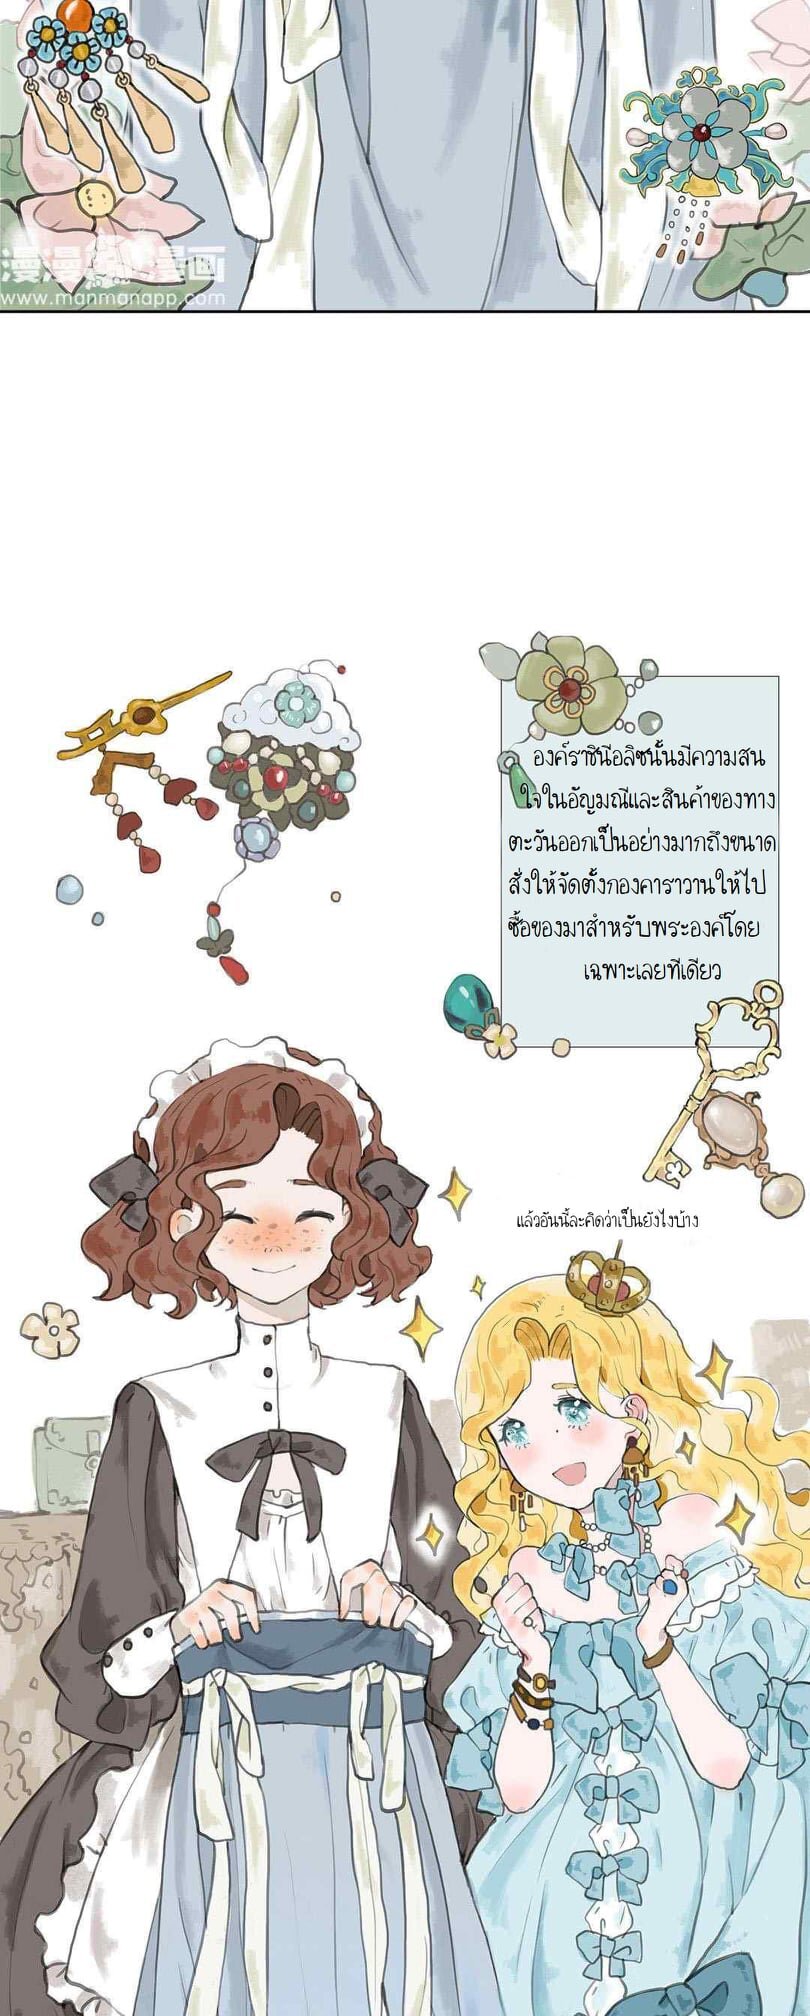 Chun & Alice 1 (10)